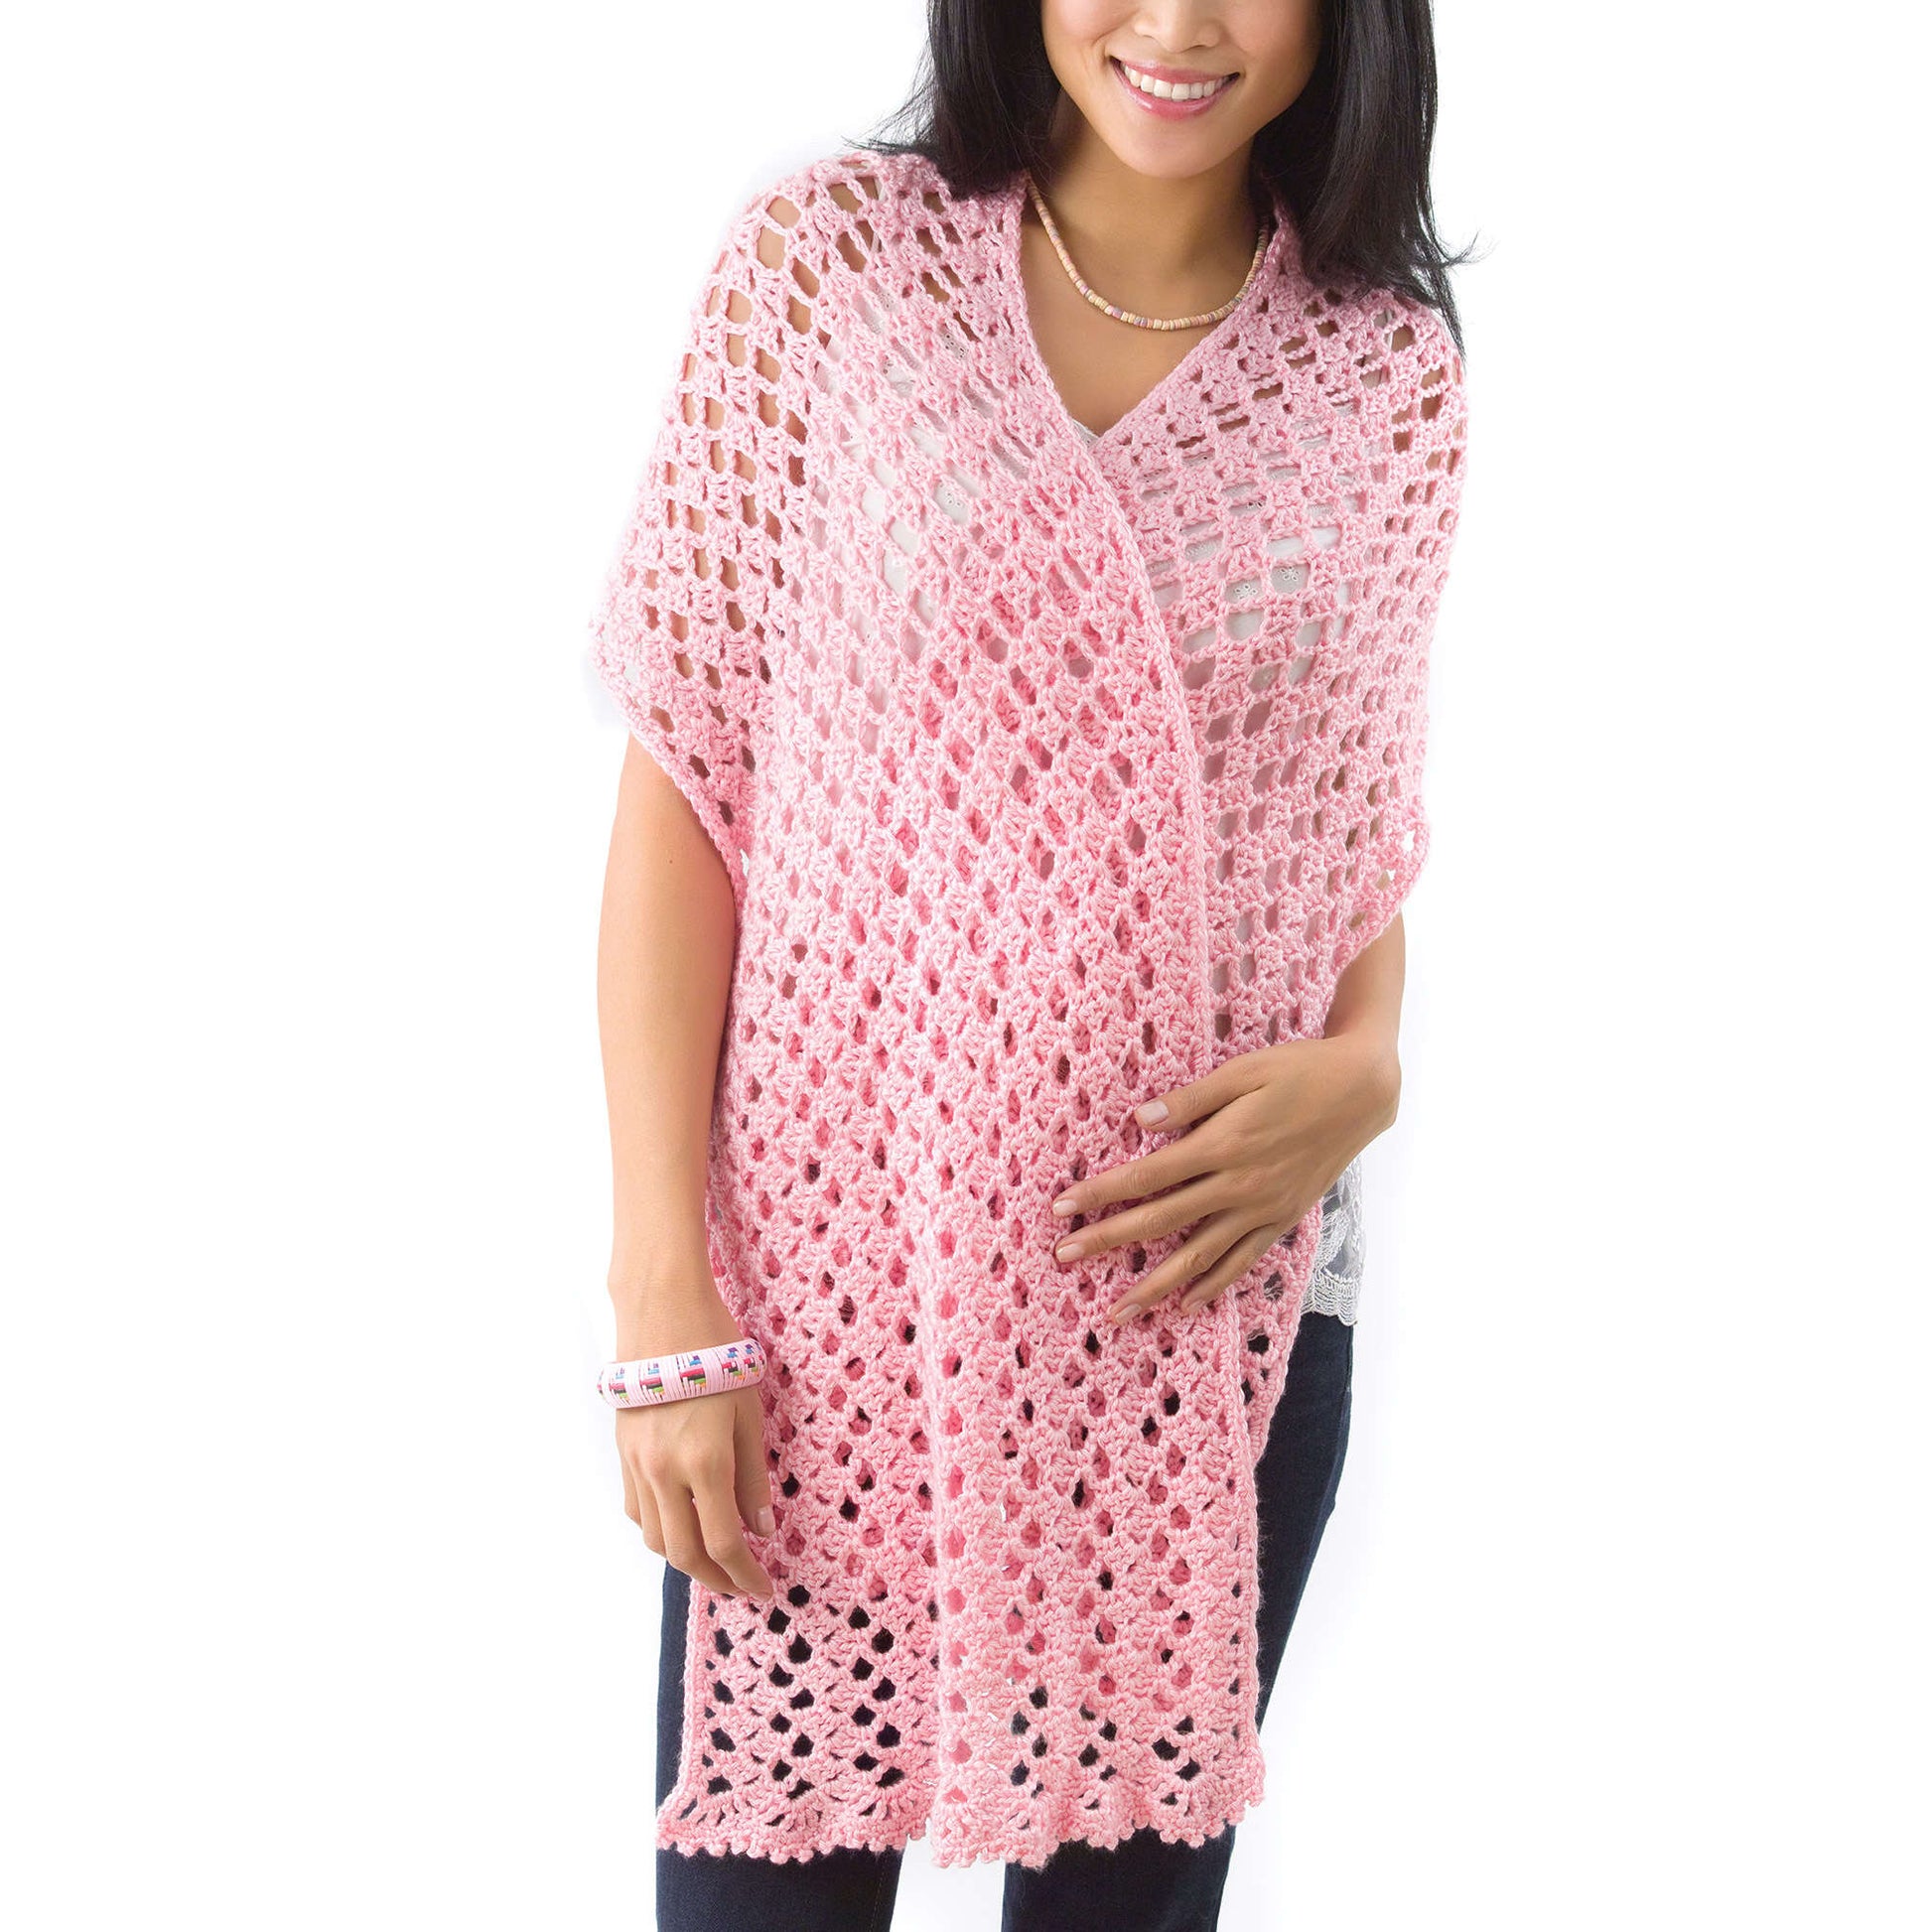 Free Caron "Pink Ribbon" Shawl Crochet Pattern